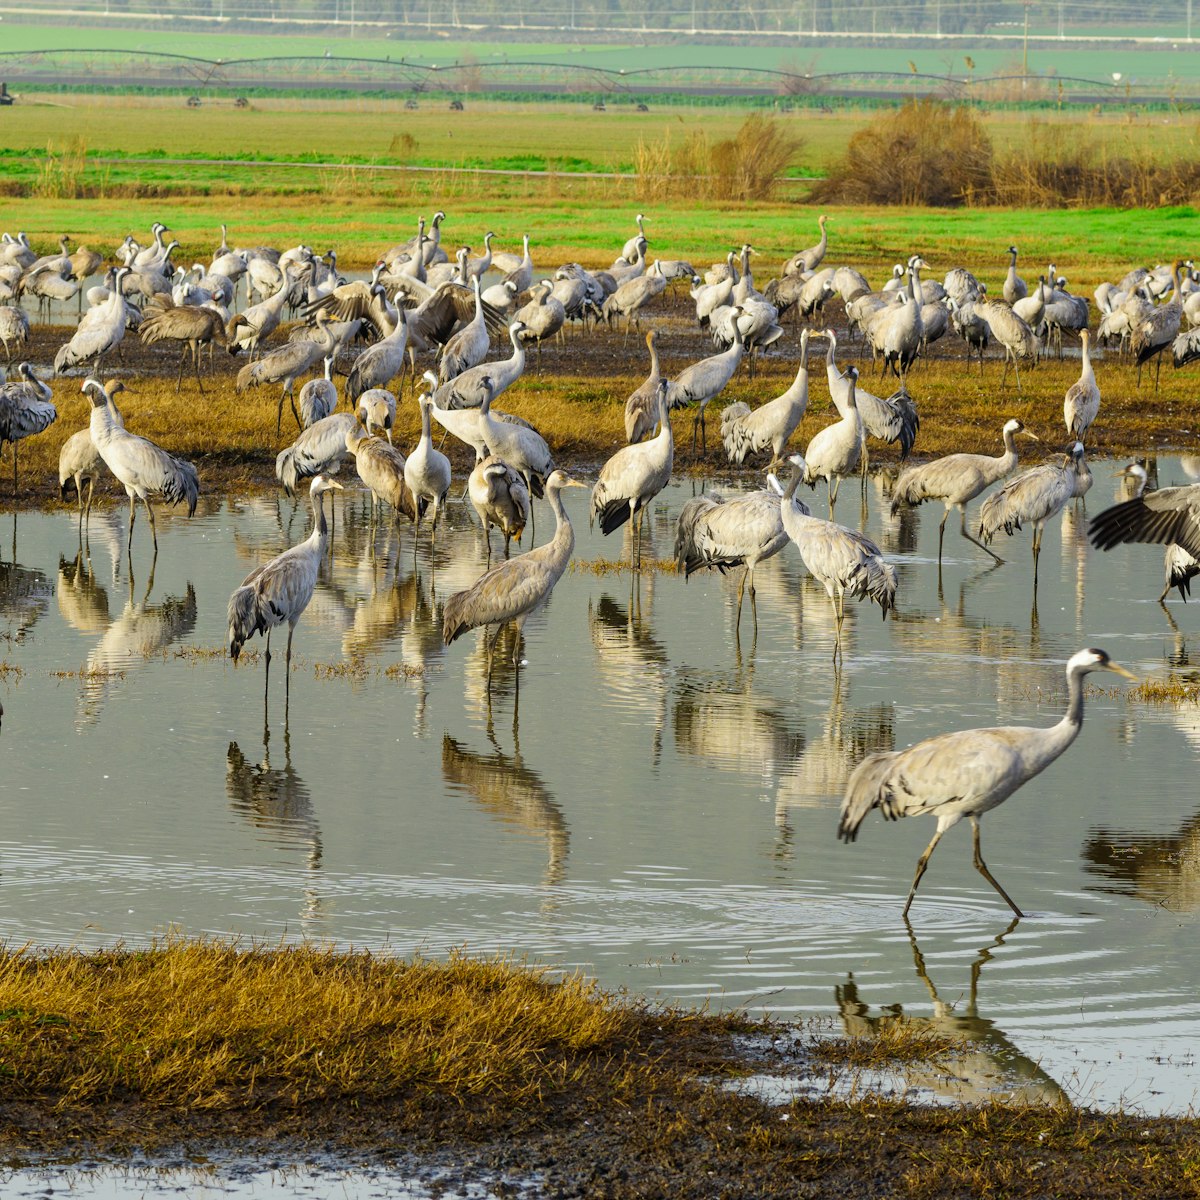 Cranes in Agamon Hula bird refuge, Hula Valley, Israel.